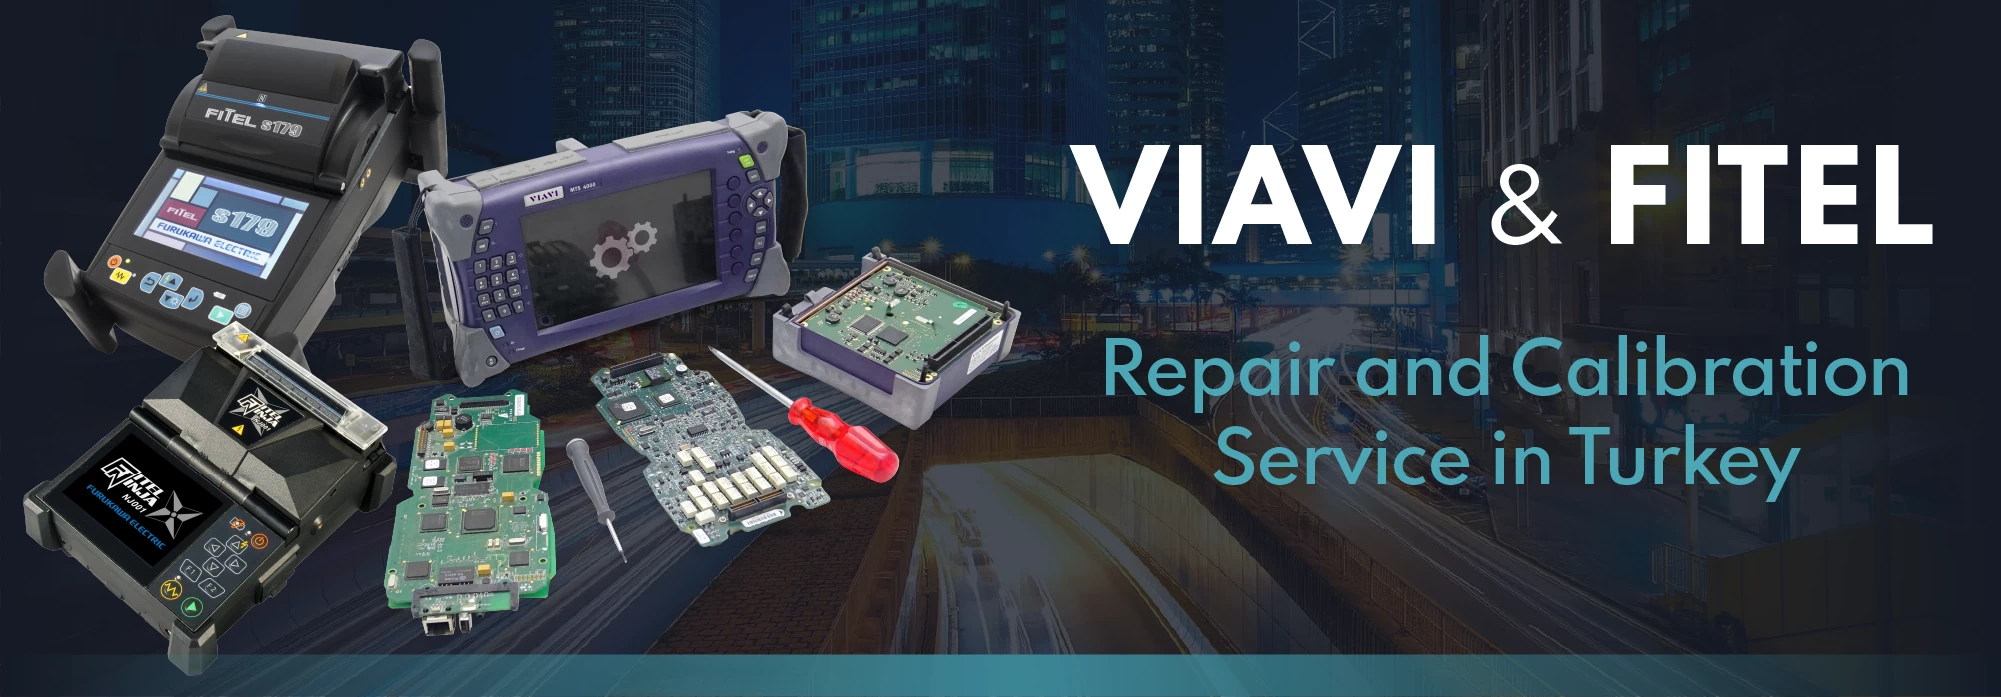 VIAVI & FITEL Repair and Calibration Service in Turkey